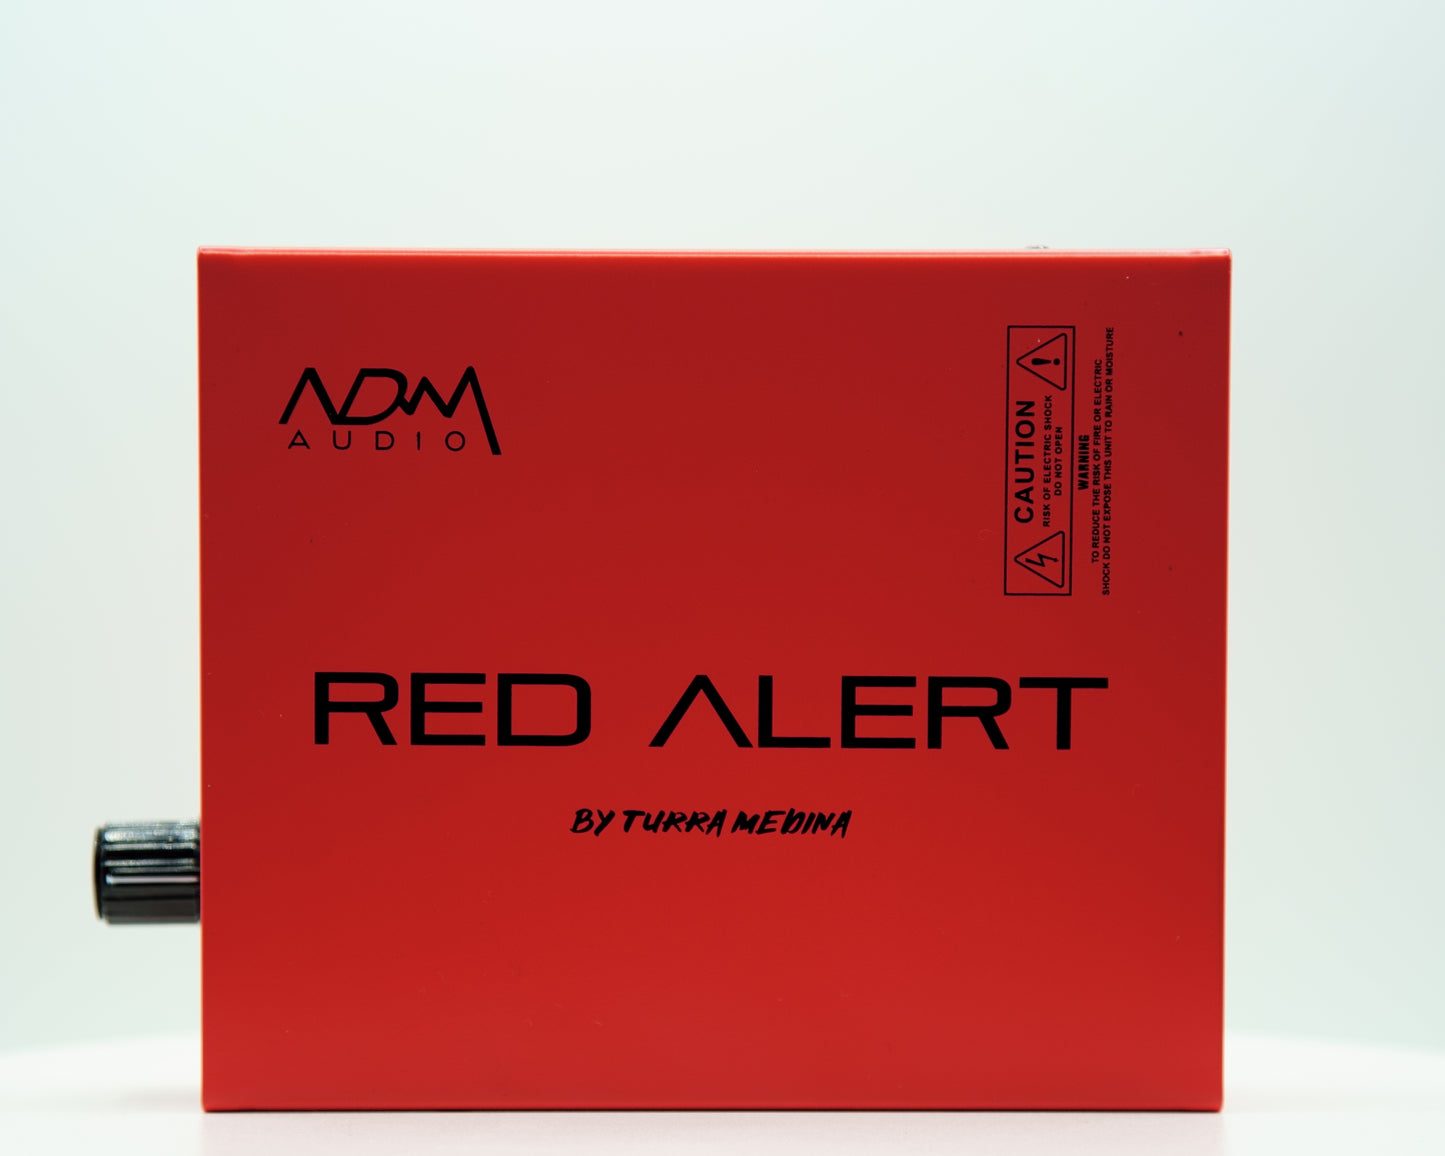 NDM Audio x Turra Medina "Red Alert"